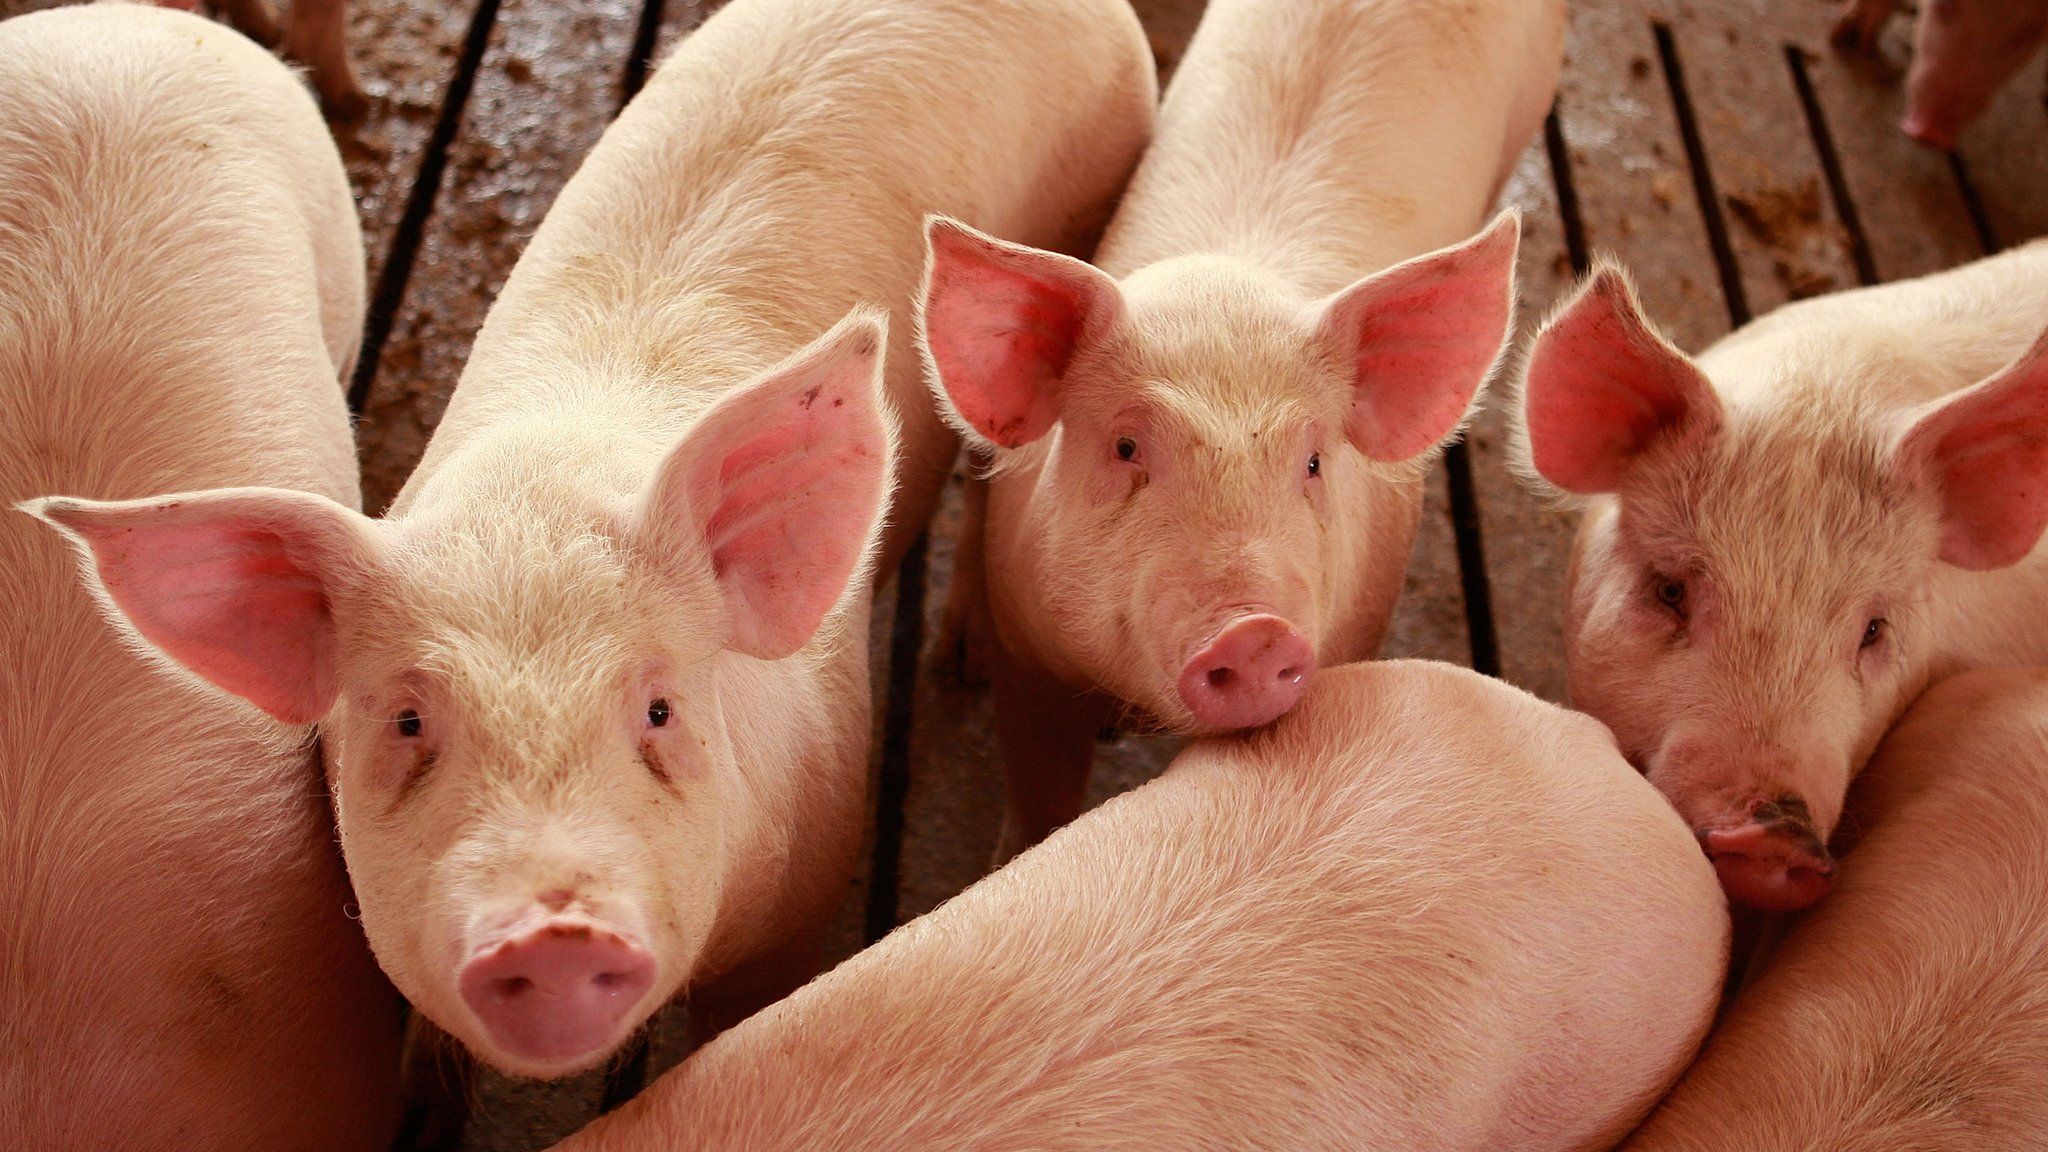 Hogs are raised on the farm of Gordon and Jeanine Lockie April 28, 2009 in Elma, Iowa